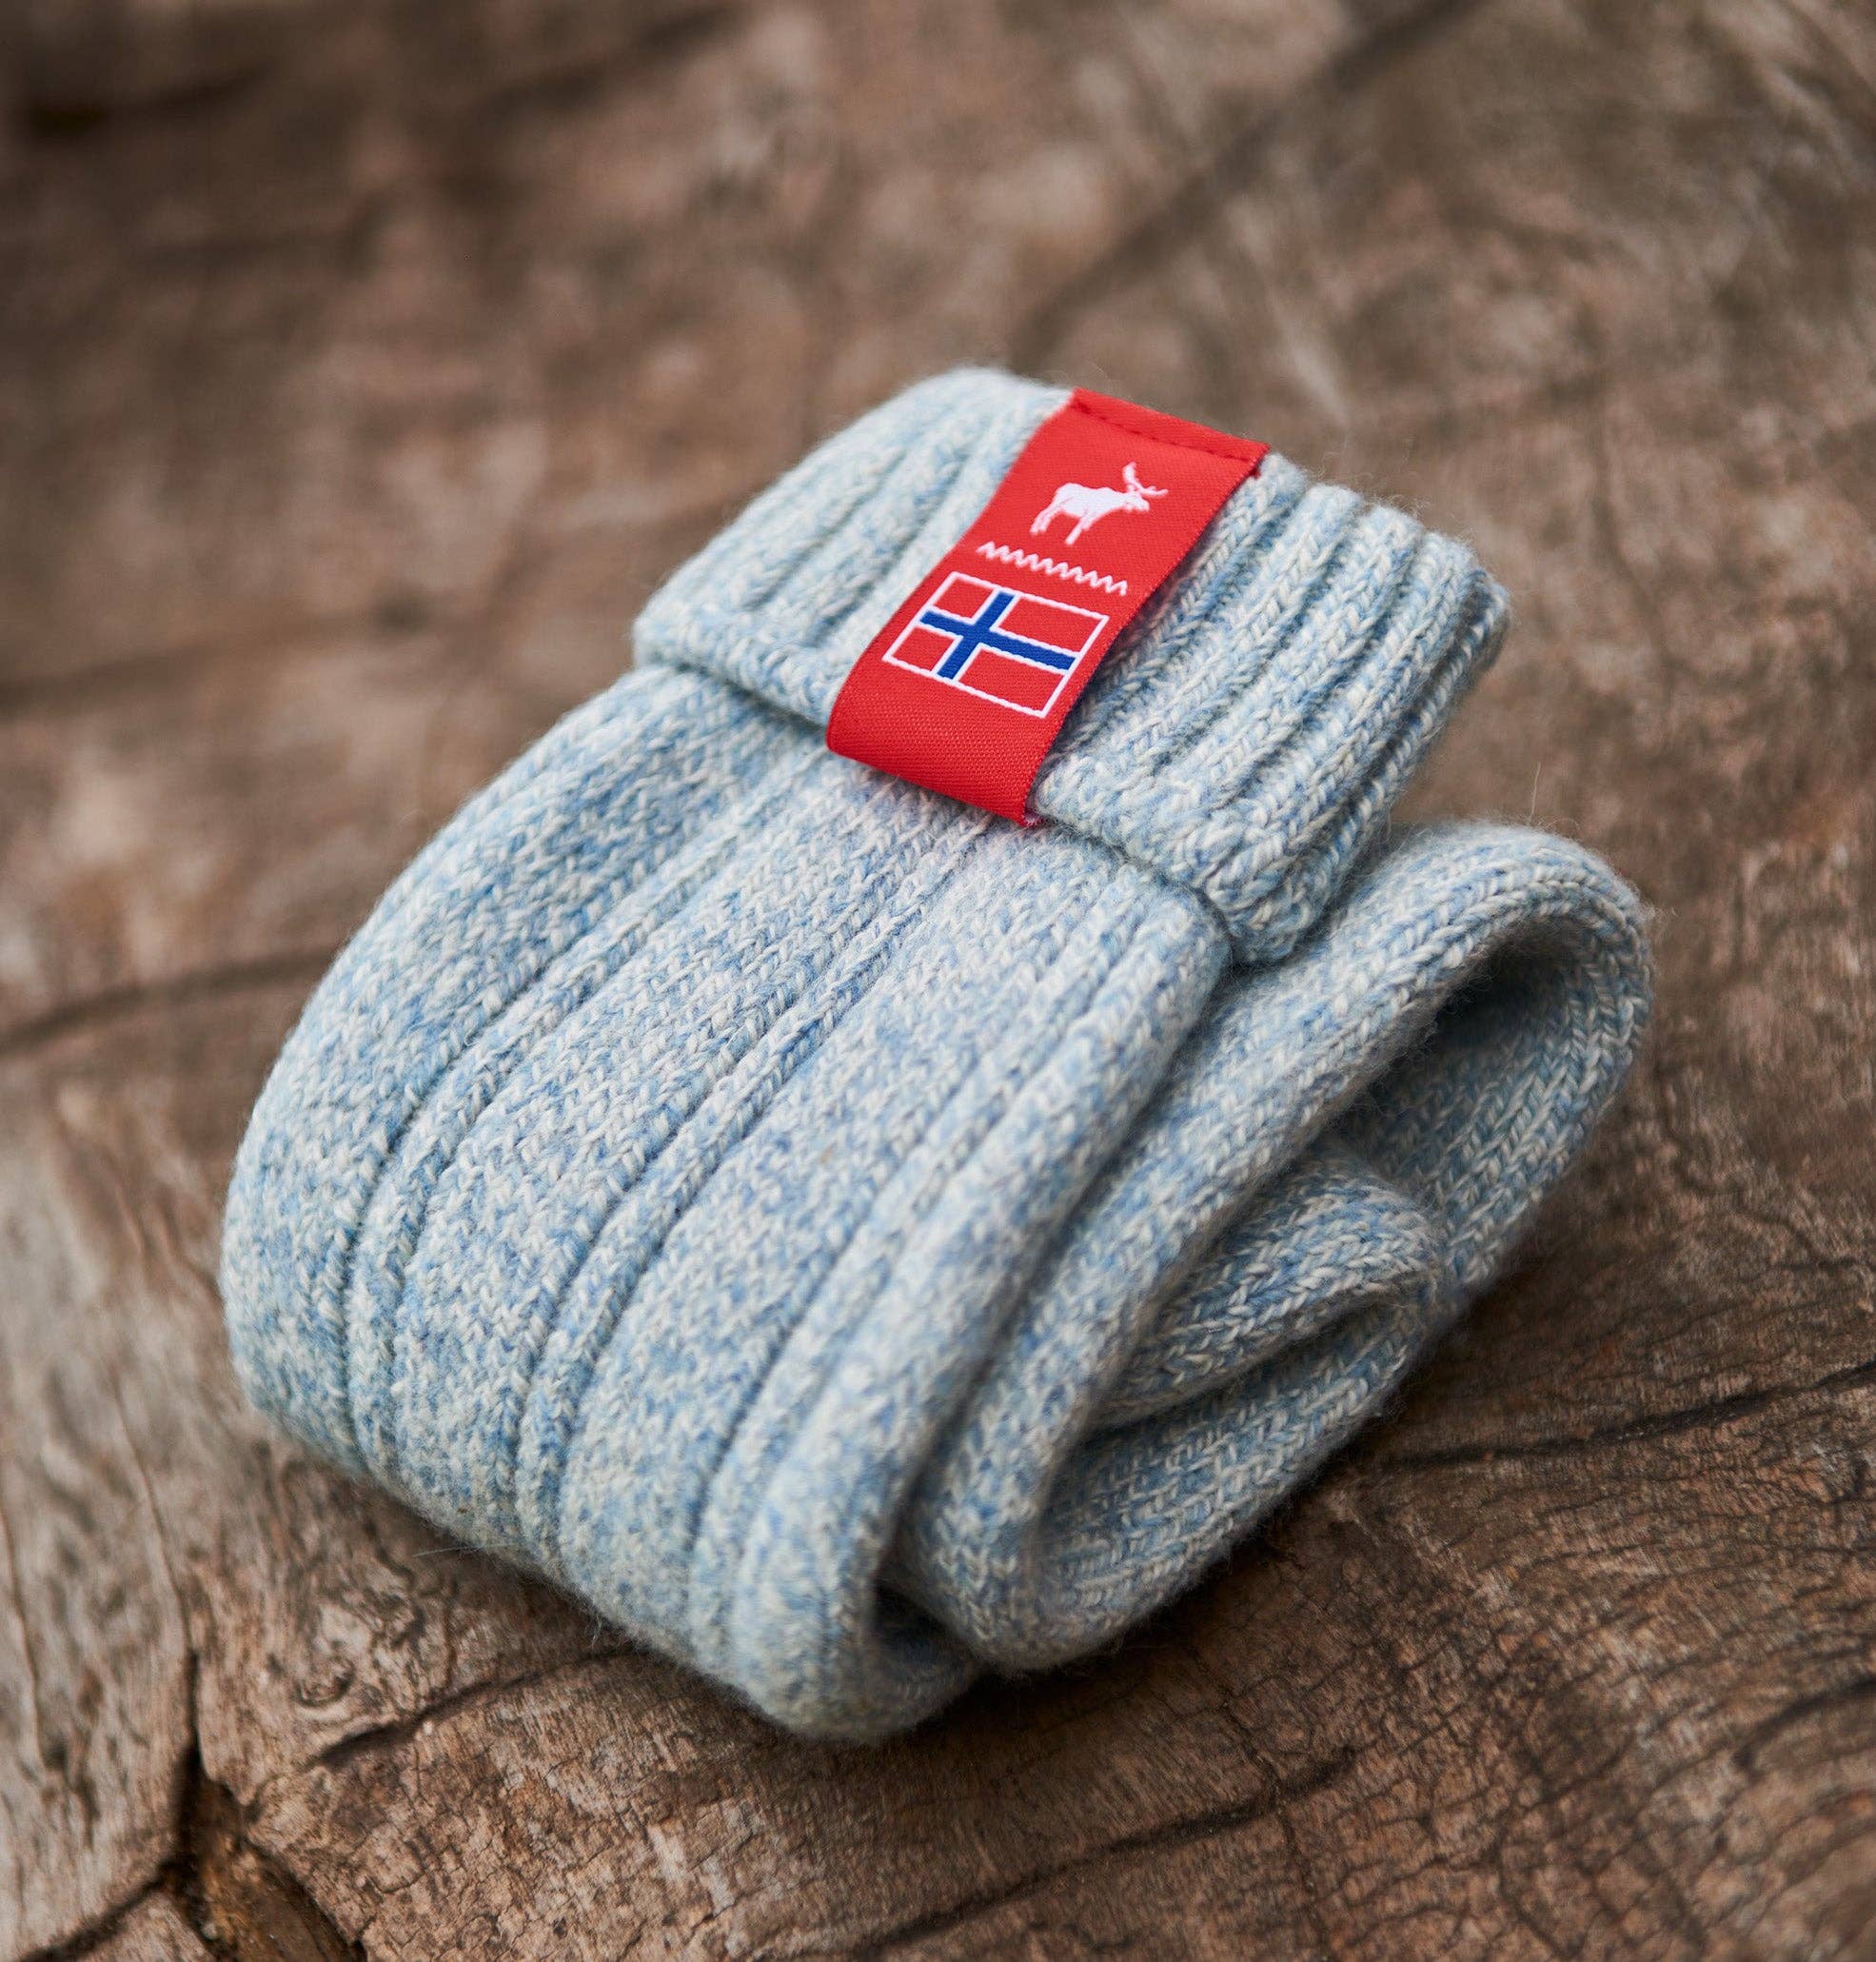 Socks: Norwegian Fjord Socks - Warm Durable Winter Socks: UK 6-8 | EU 39-42